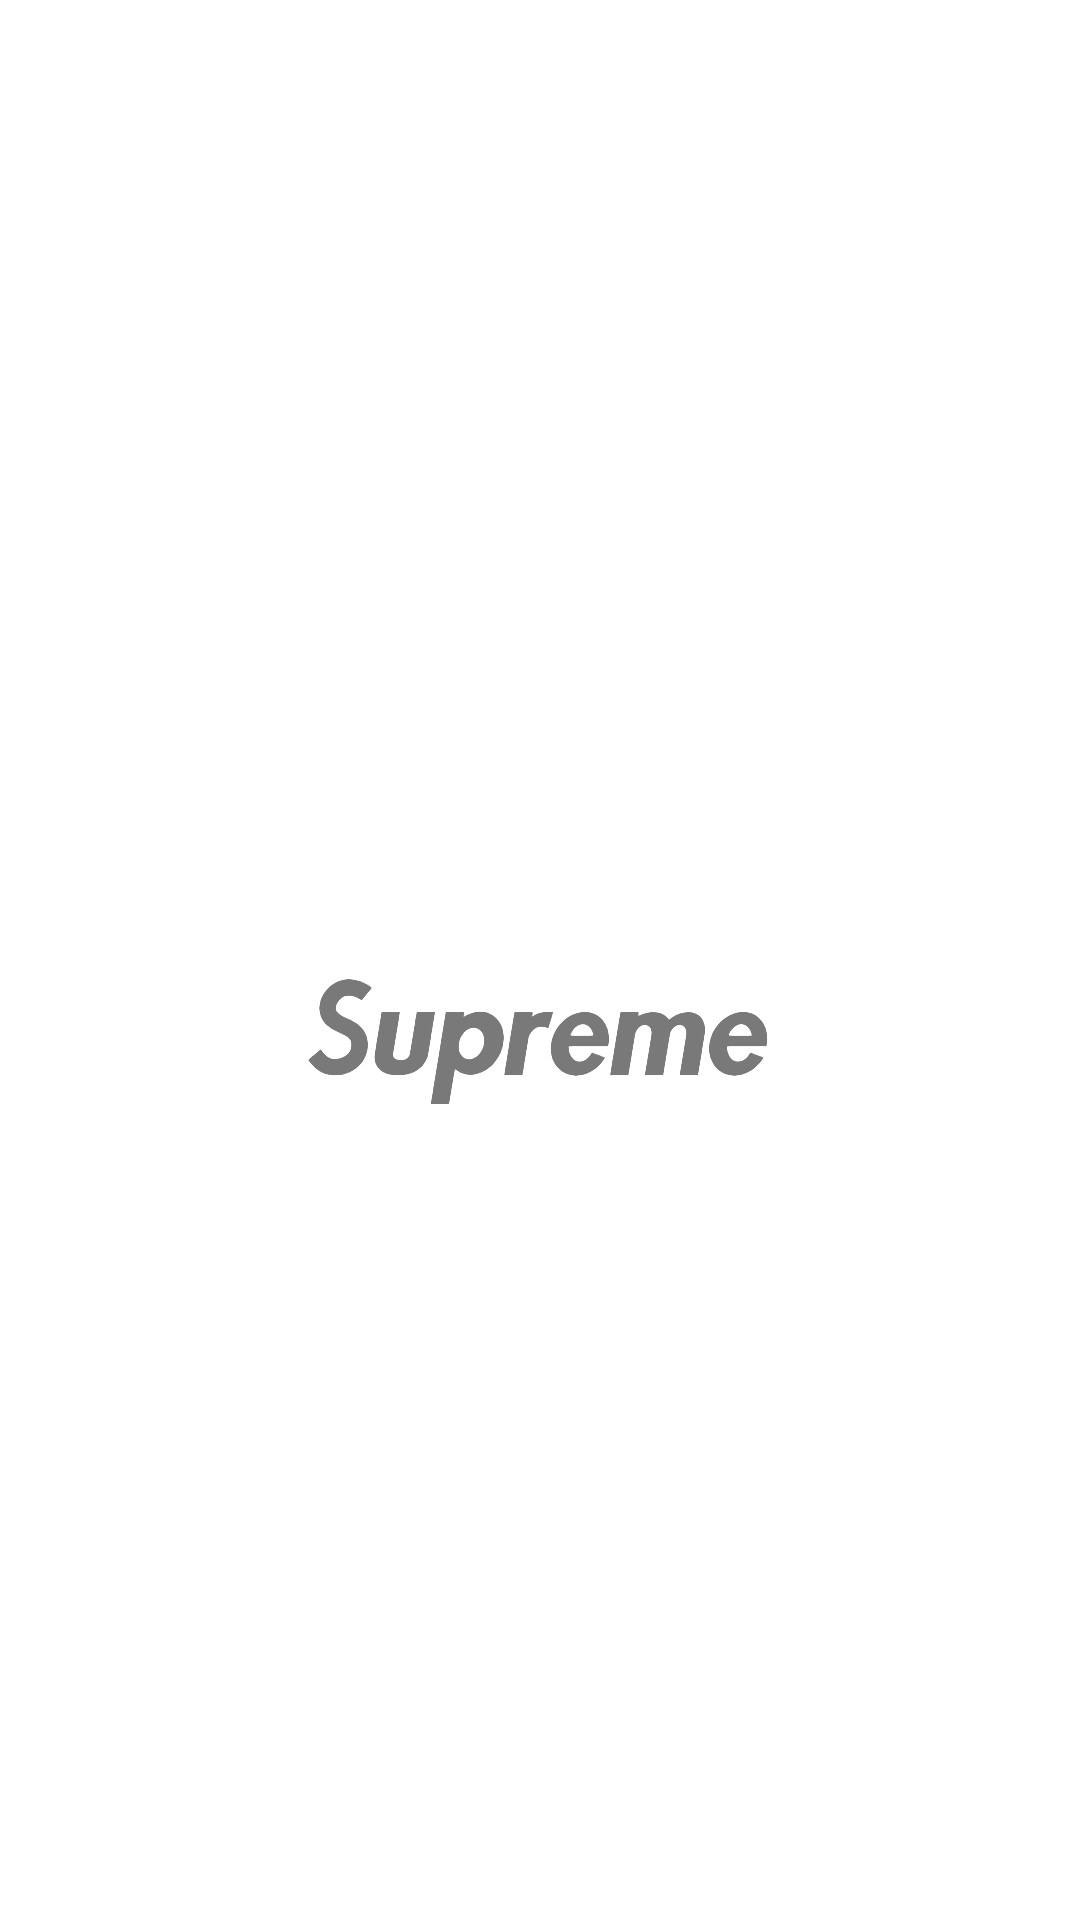 supreme09 - Supreme[シュプリーム]の高画質スマホ壁紙23枚 [iPhone＆Androidに対応]